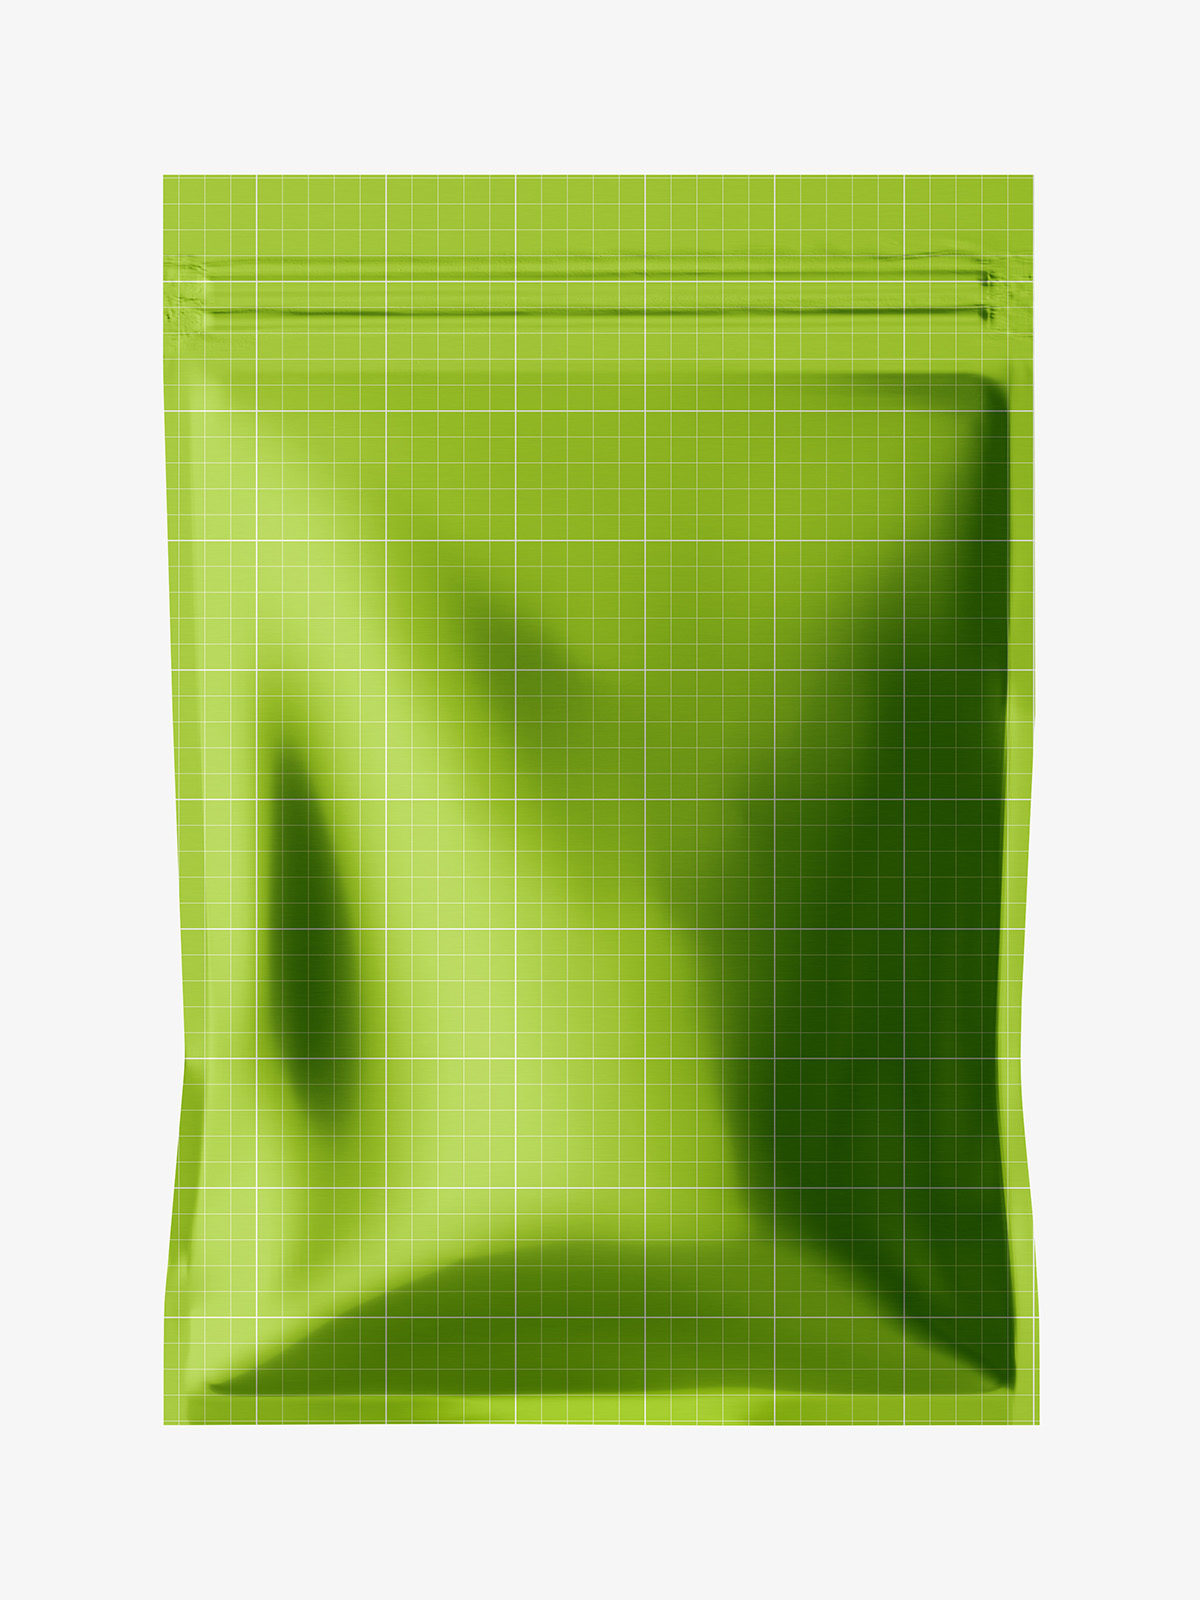 Download Aluminium foil bag mockup - Smarty Mockups